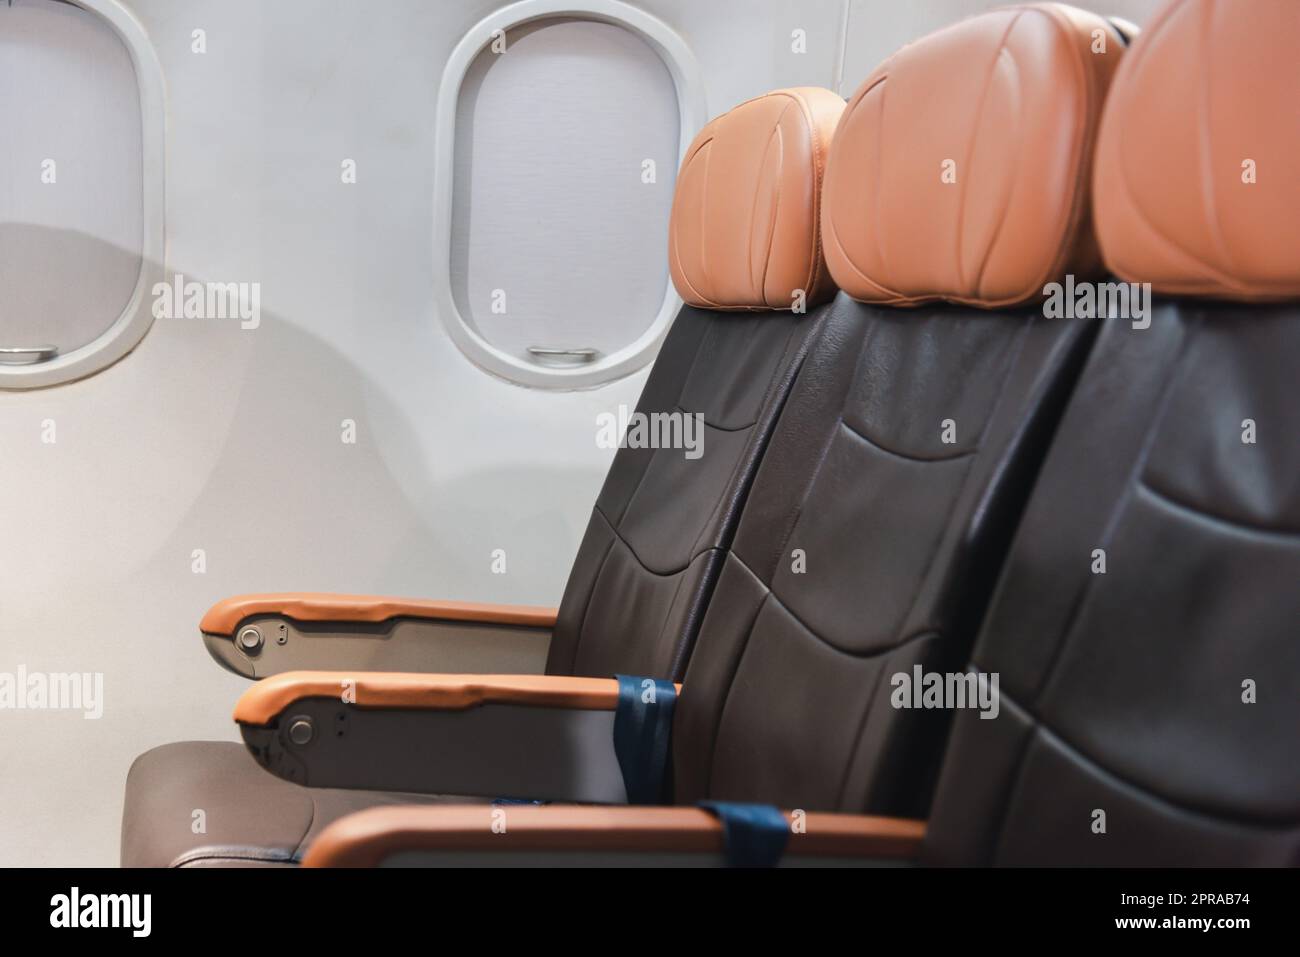 Empty aircraft seats and windows, passenger seat interior airplane Stock Photo